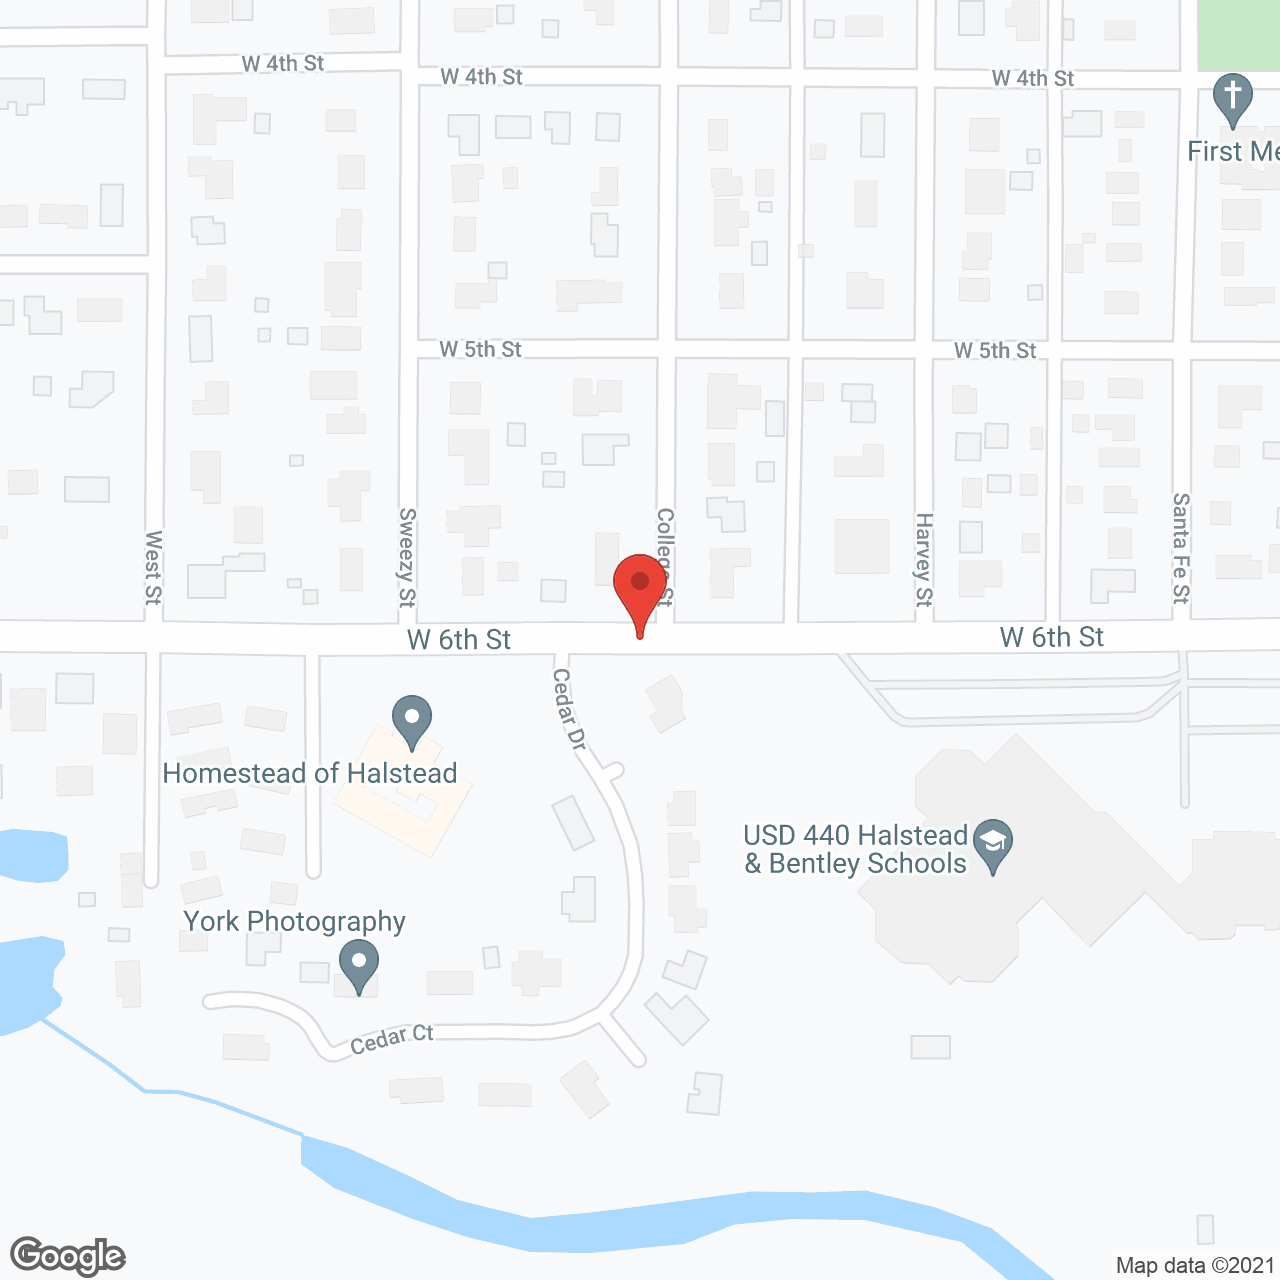 Homestead of Halstead in google map